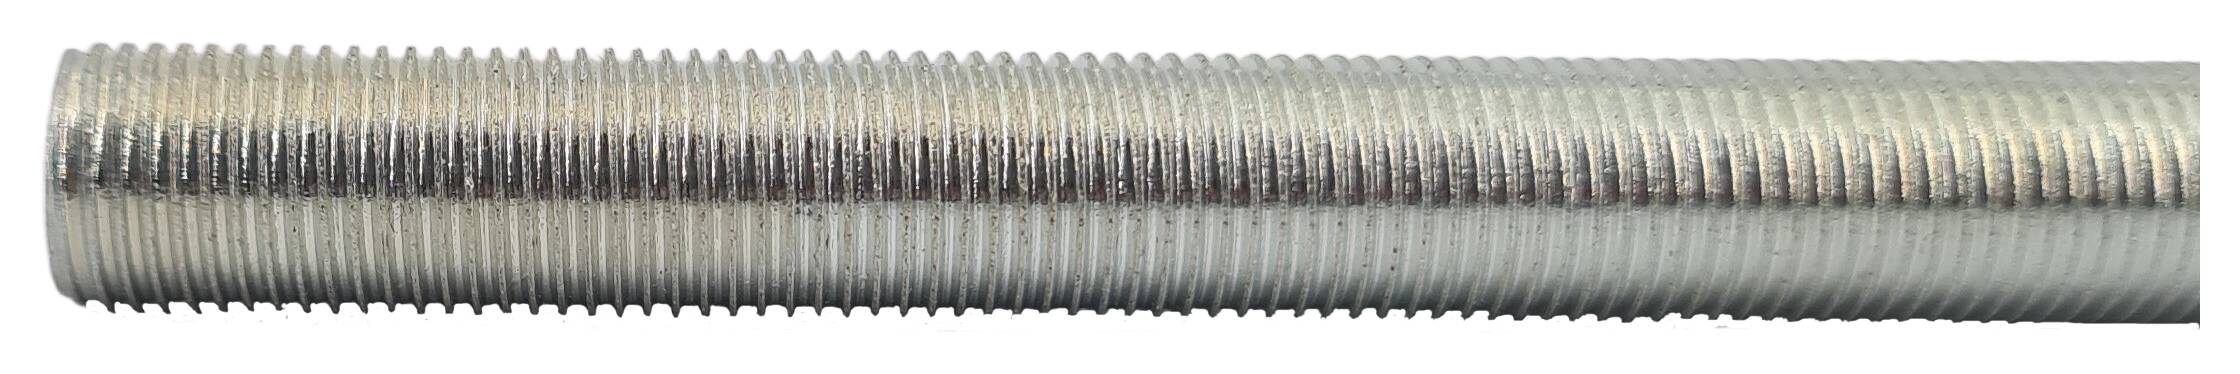 iron thread tube M10x1x550 round zinc